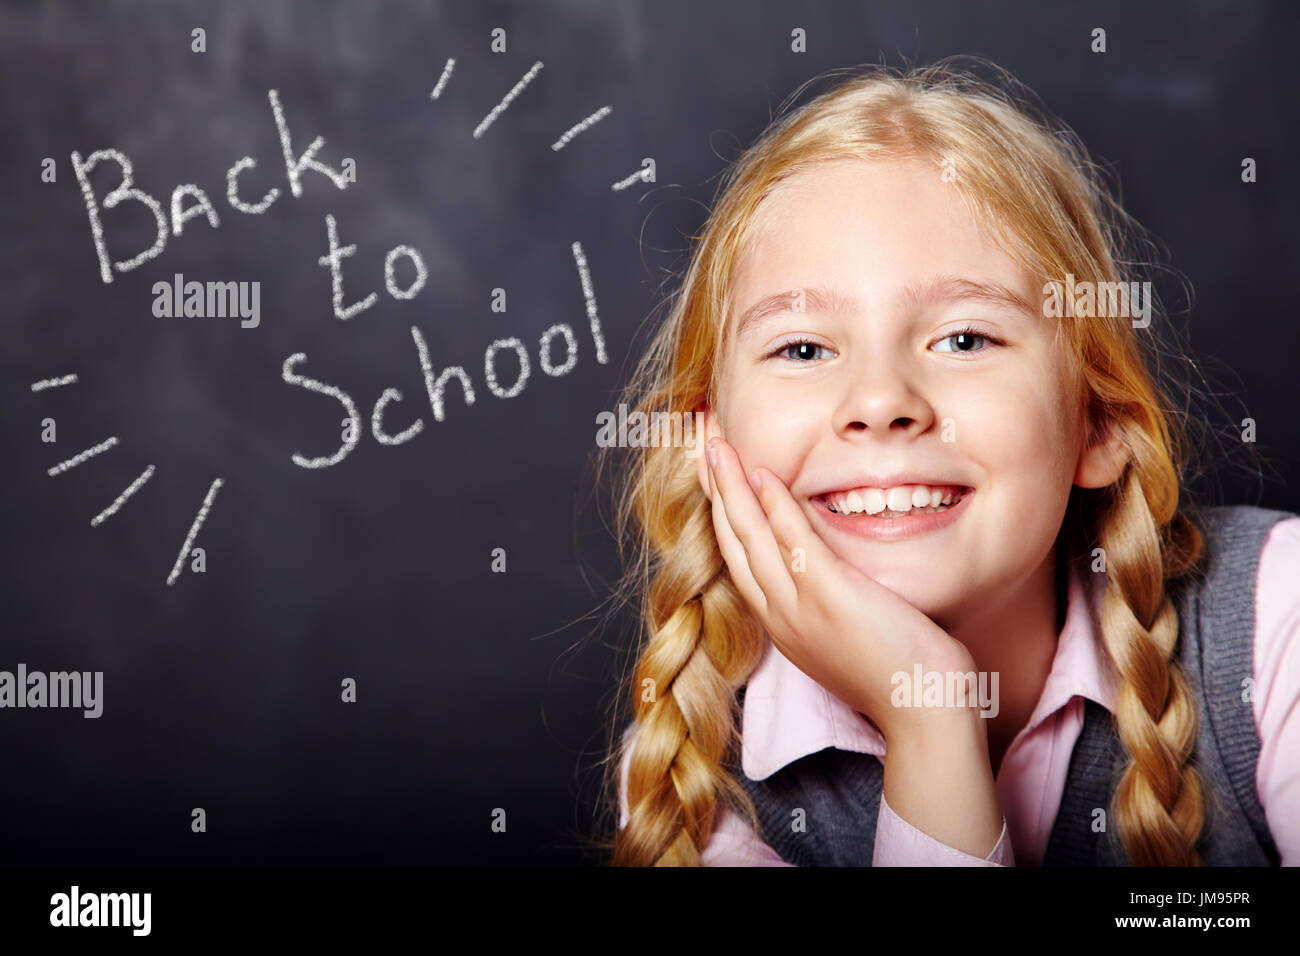 schoolchild on blackboard background Stock Photo